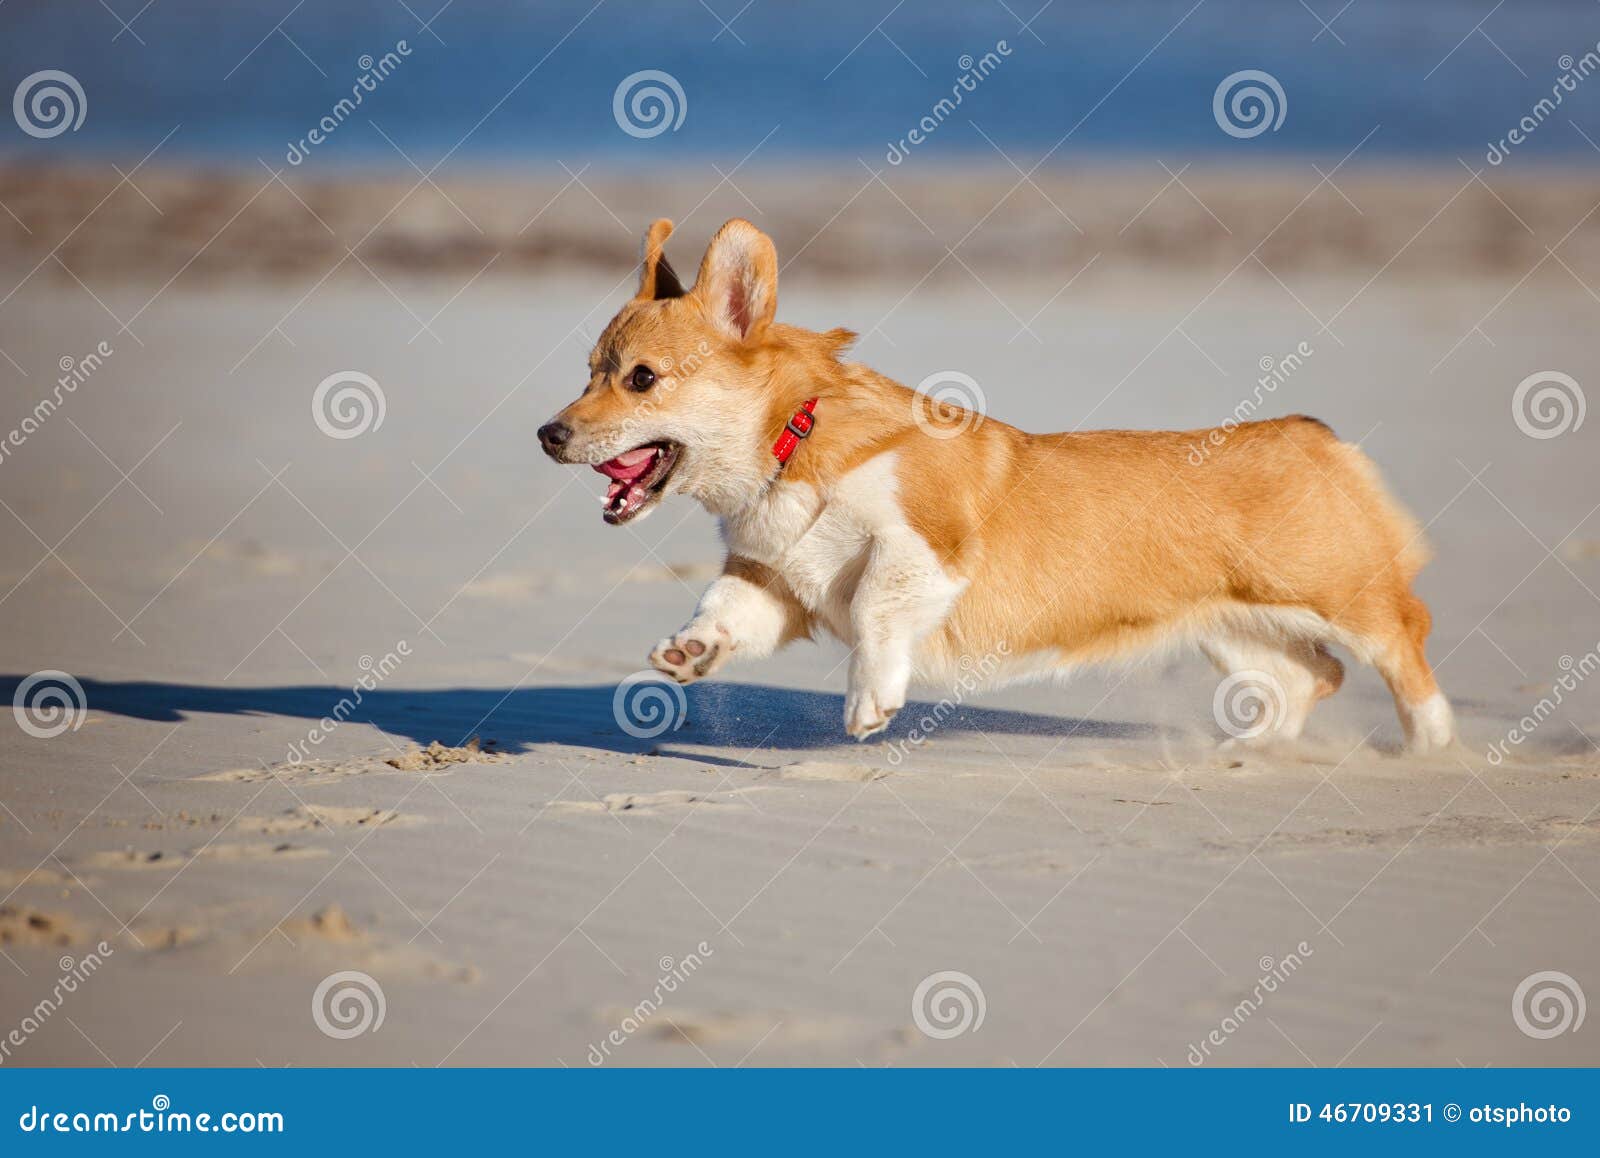 Welsh Corgi Cardigan Dog Running on a Beach Stock Image - Image of ...